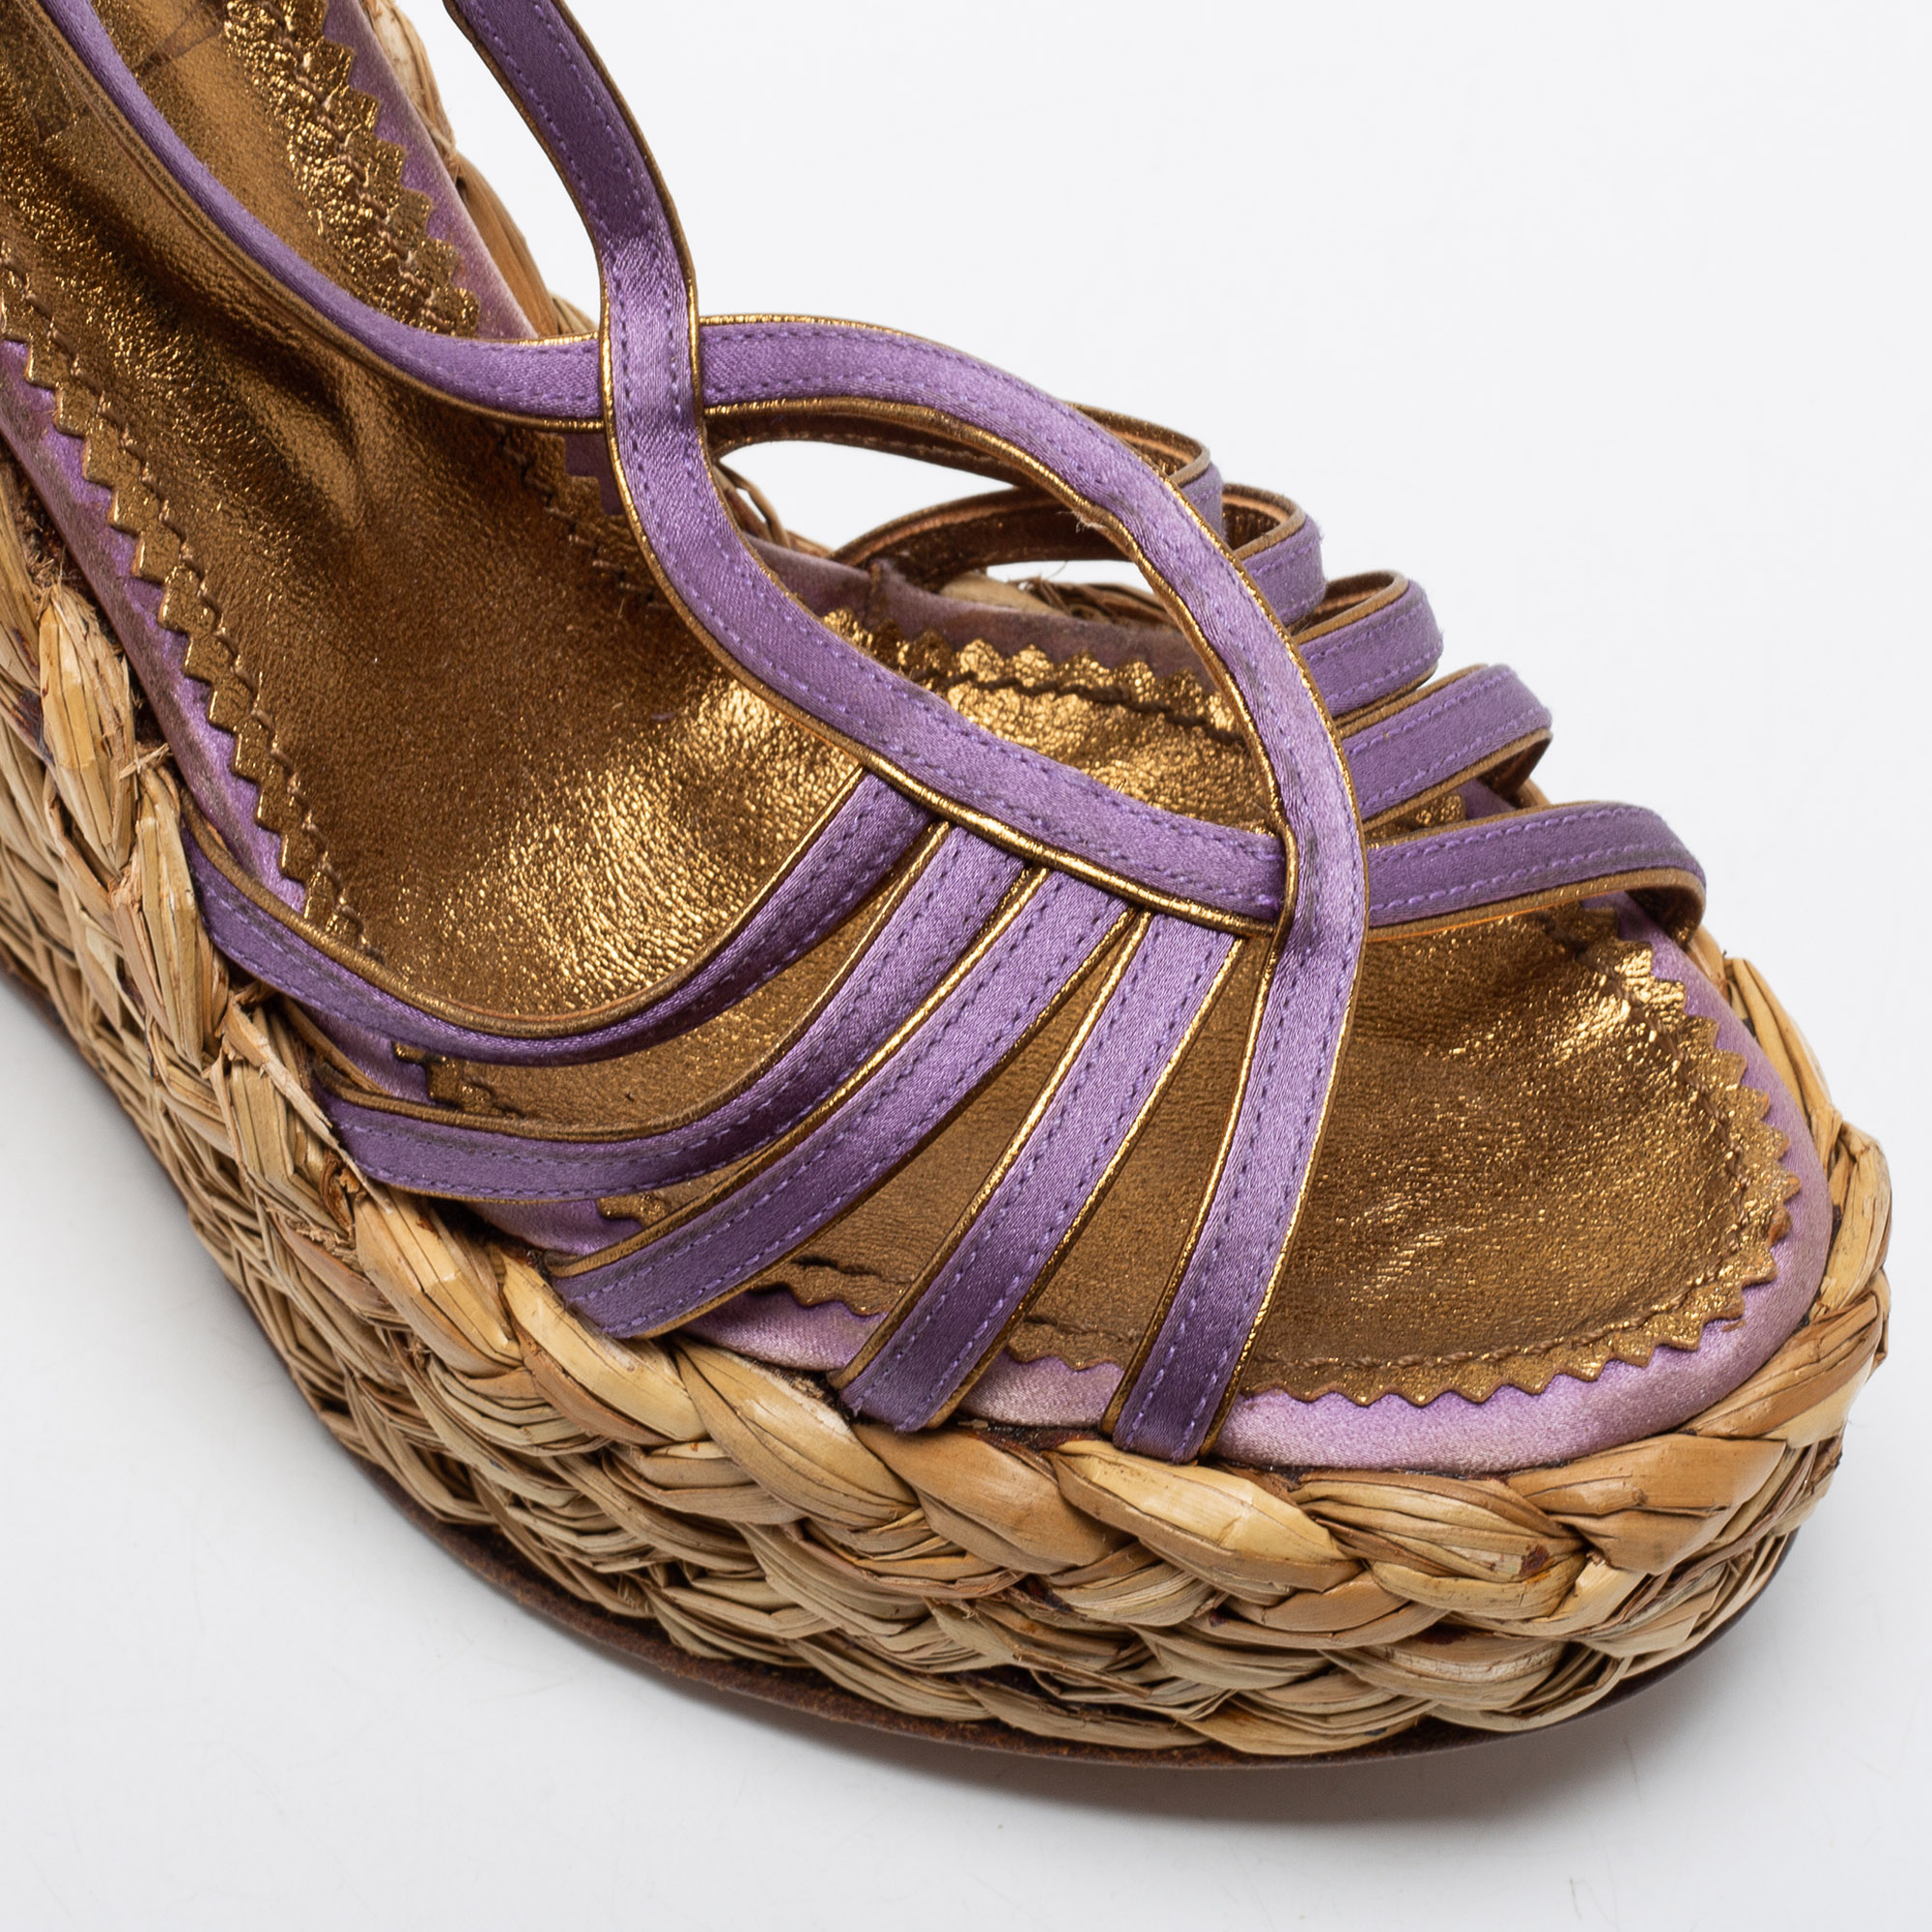 Yves Saint Laurent Purple Satin Woven Straw Platform Wedge Sandals Size 35